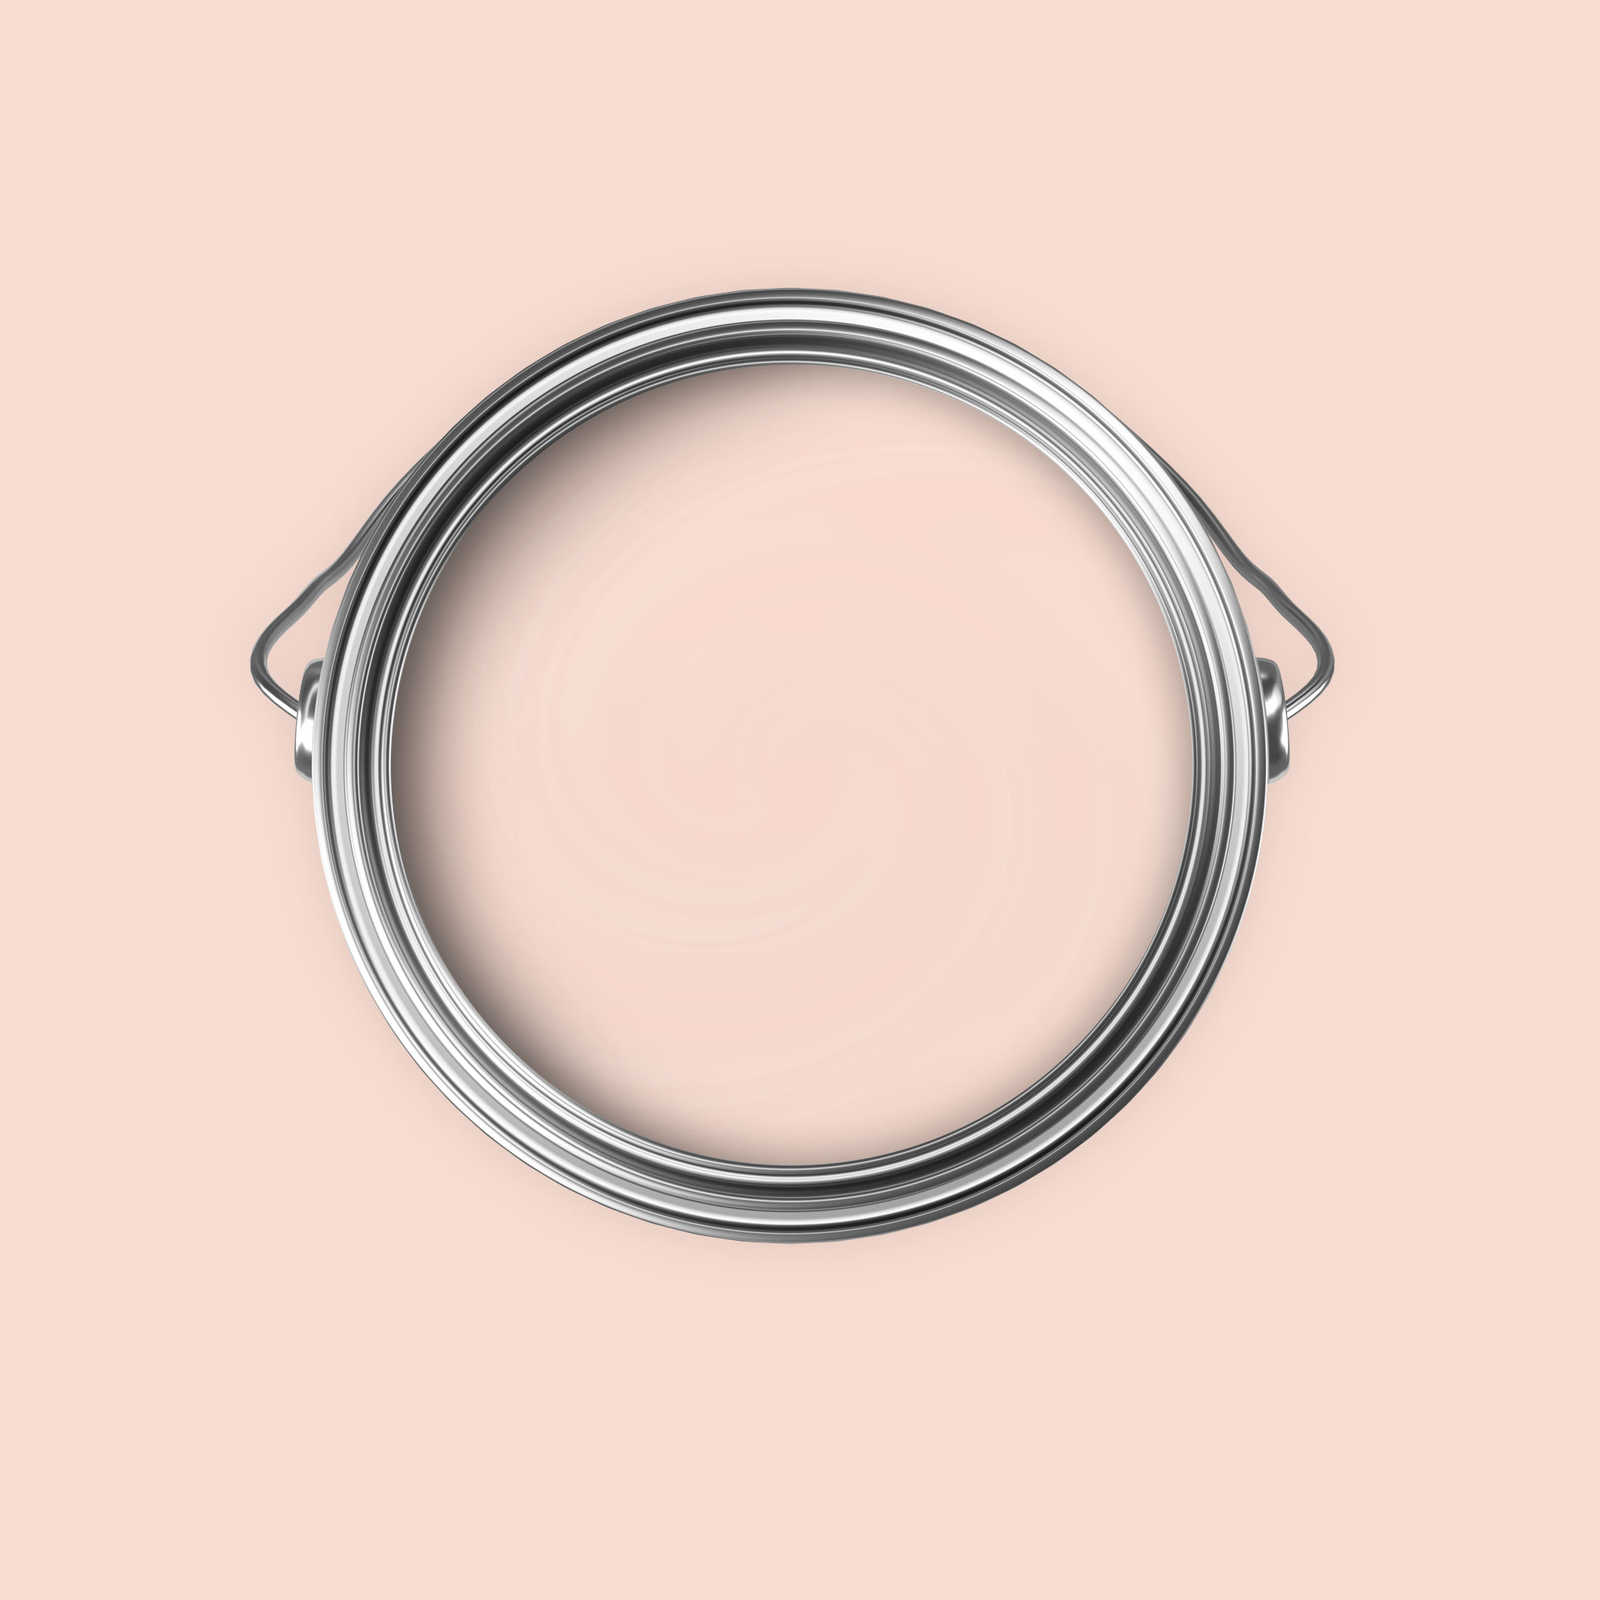             Premium Muurverf knus roze »Luxury Lipstick« NW1000 – 5 liter
        